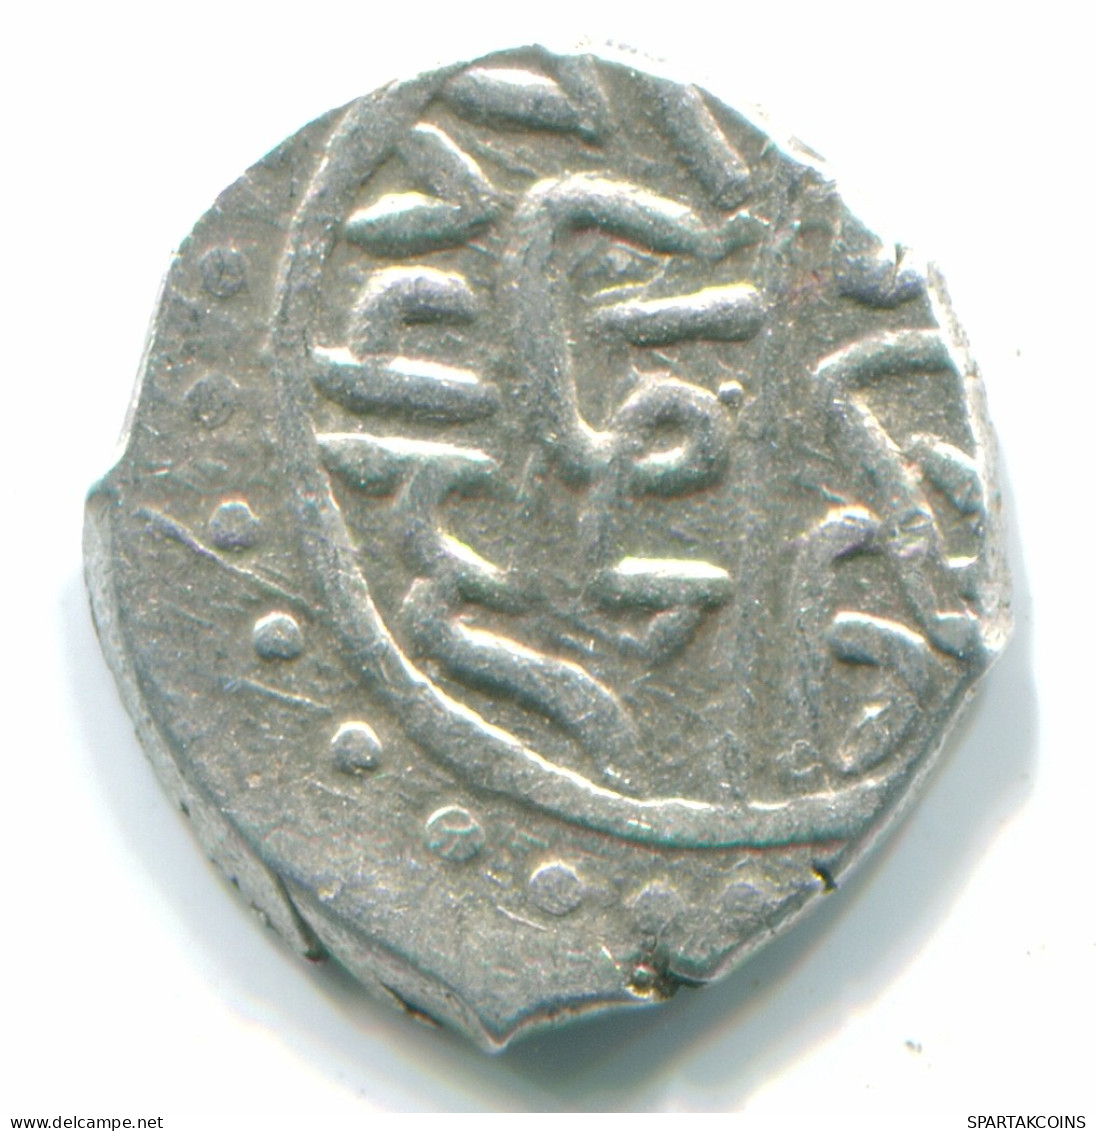 OTTOMAN EMPIRE BAYEZID II 1 Akce 1481-1512 AD Silver Islamic Coin #MED10036.7.U.A - Islamic